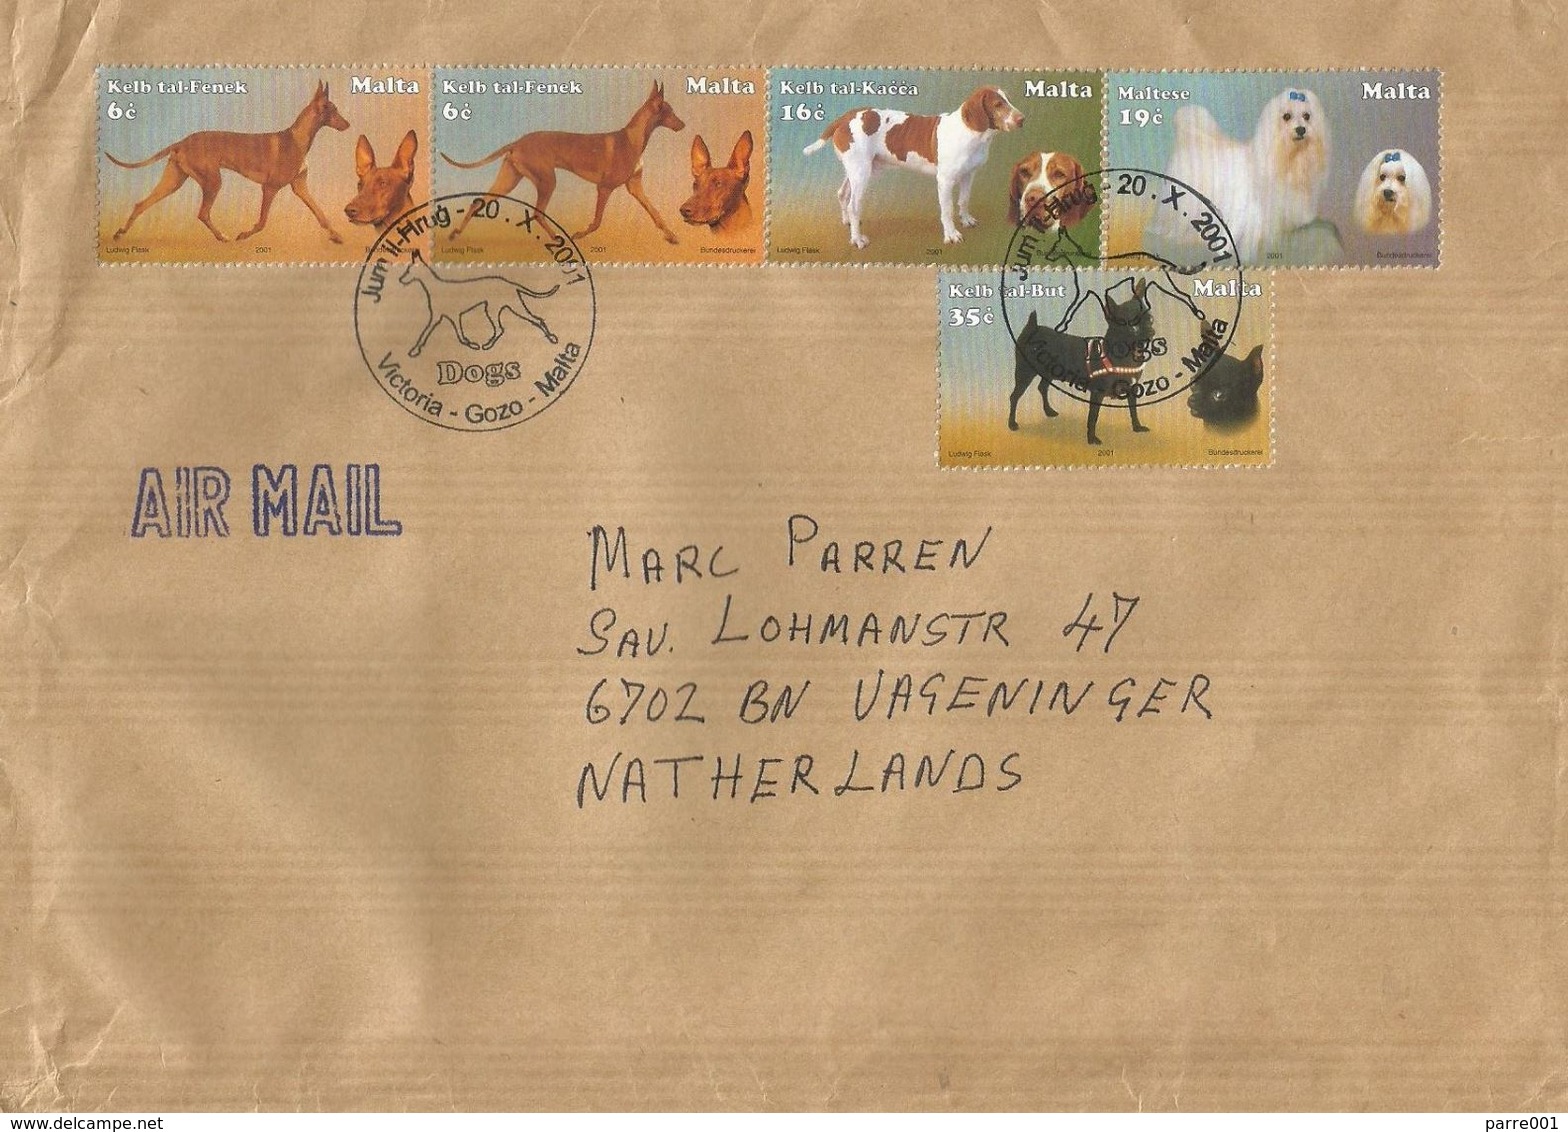 Malta 2001 Victoria Gozo Maltese Dogs FDC Postmark Cover - Perros